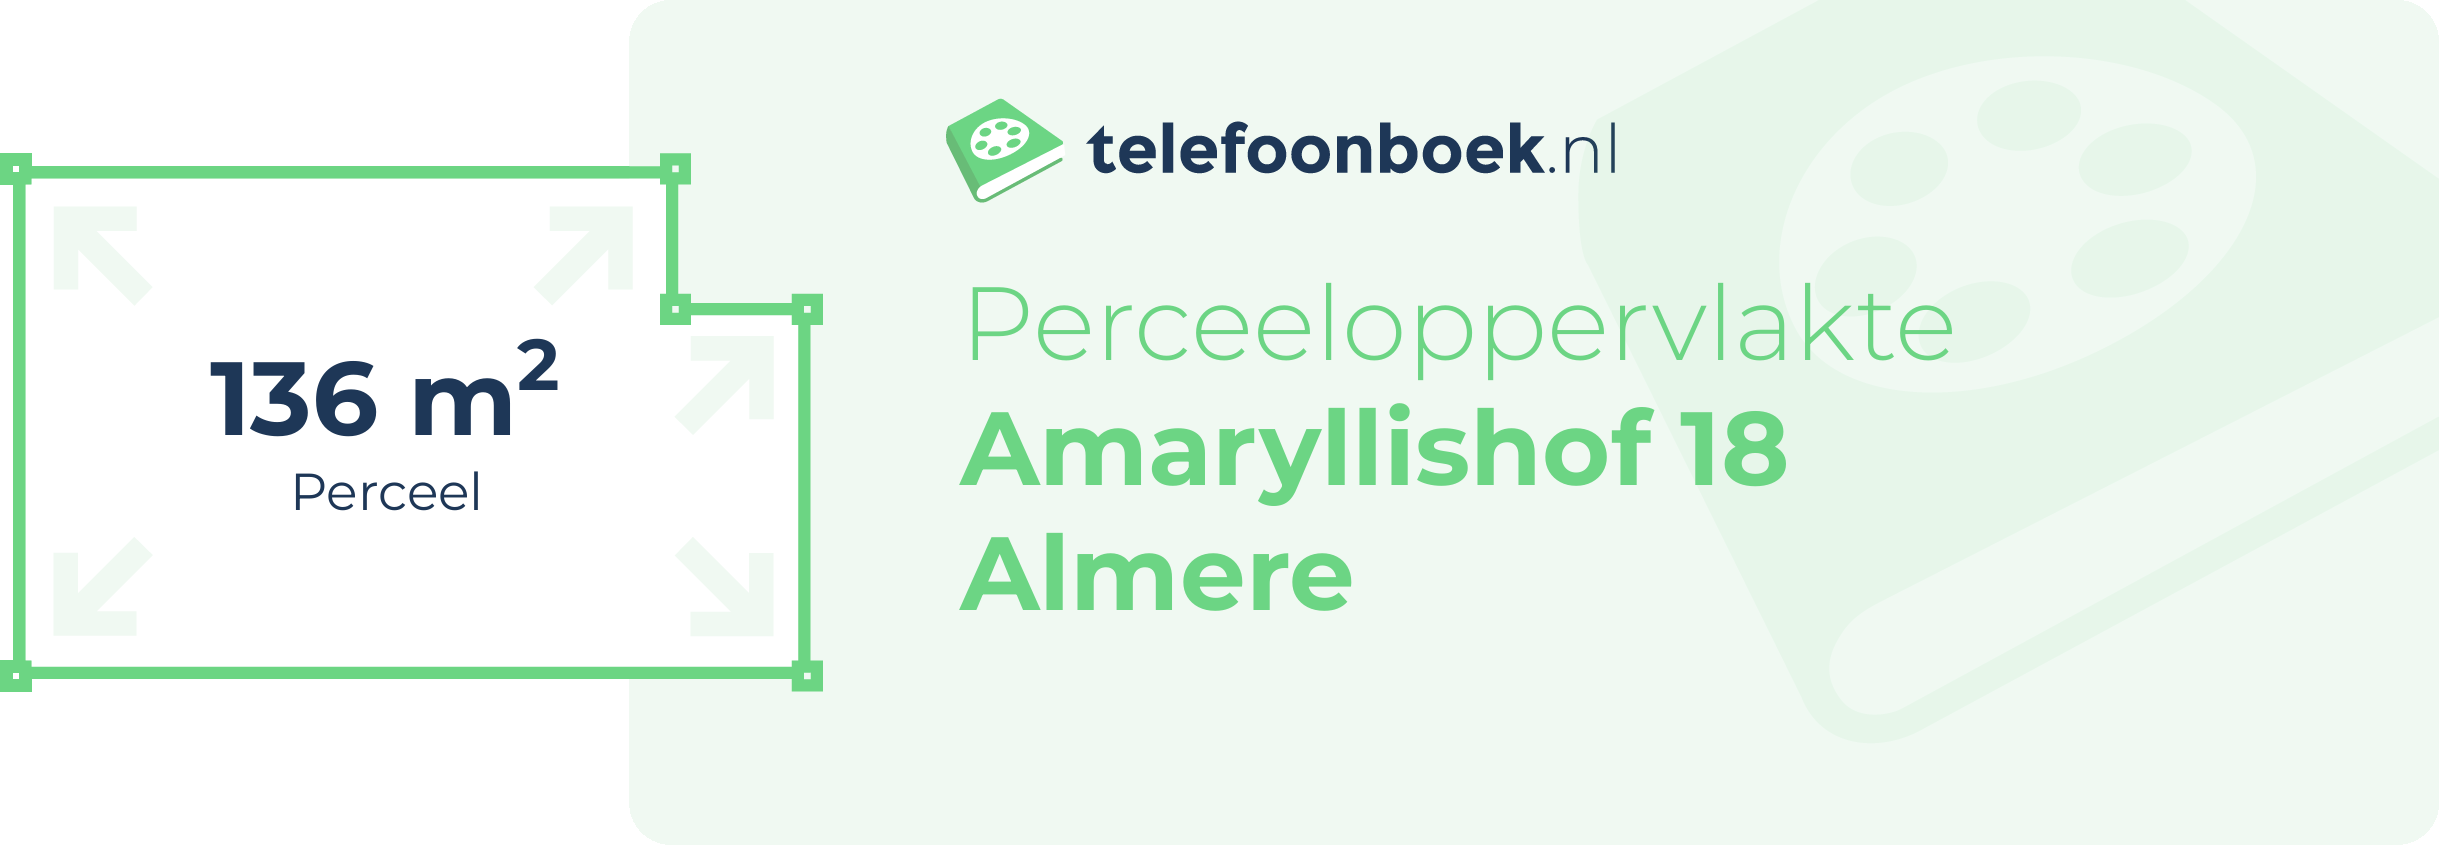 Perceeloppervlakte Amaryllishof 18 Almere